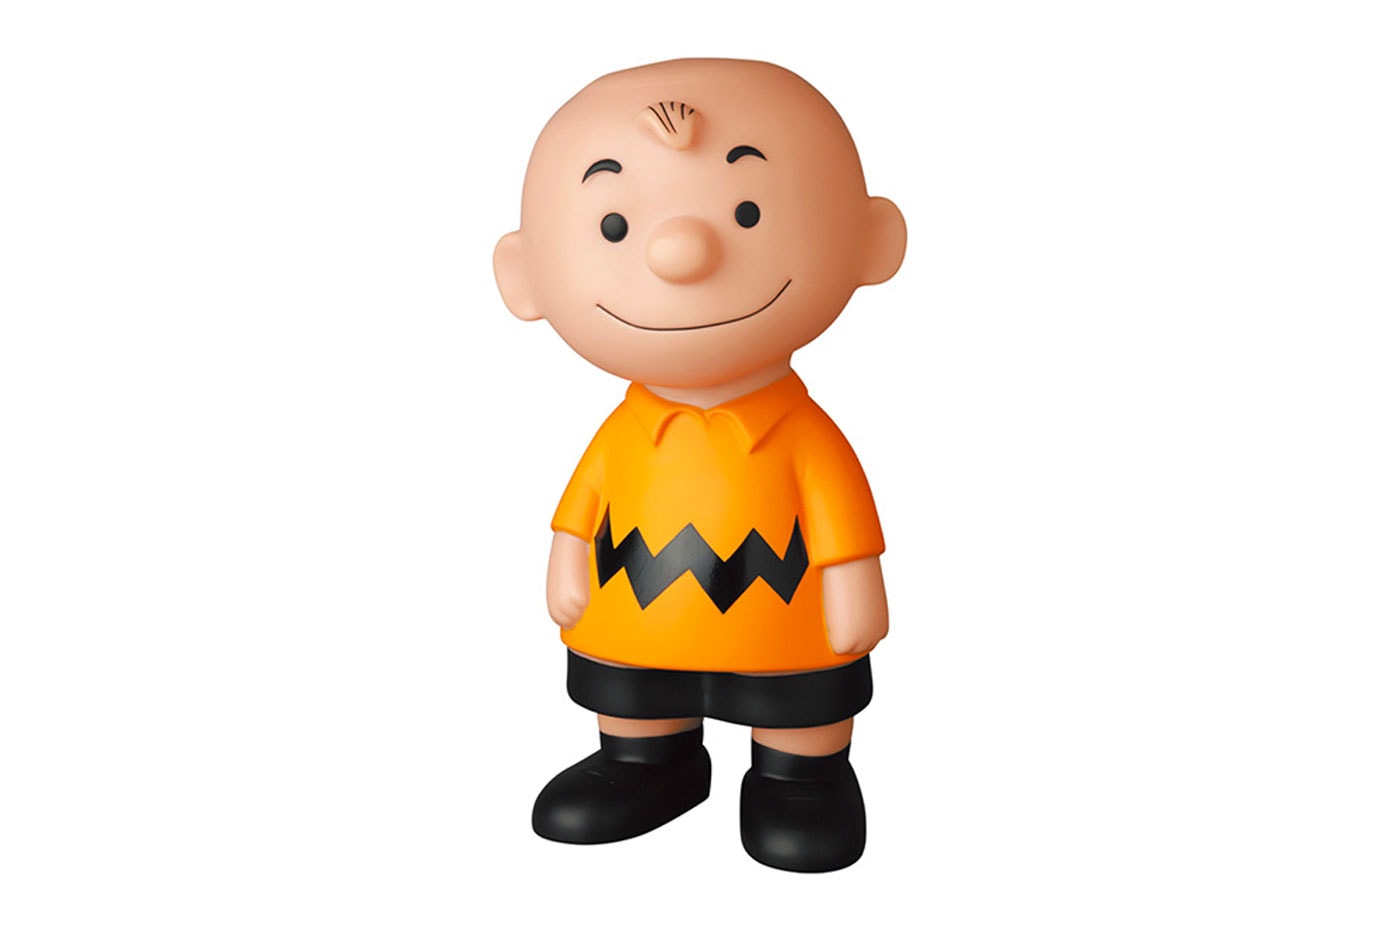 Medicom Toy 1950s Vintage 'Peanuts' Reprint Figures Info design japan snoopy Charlie Brown white orange black